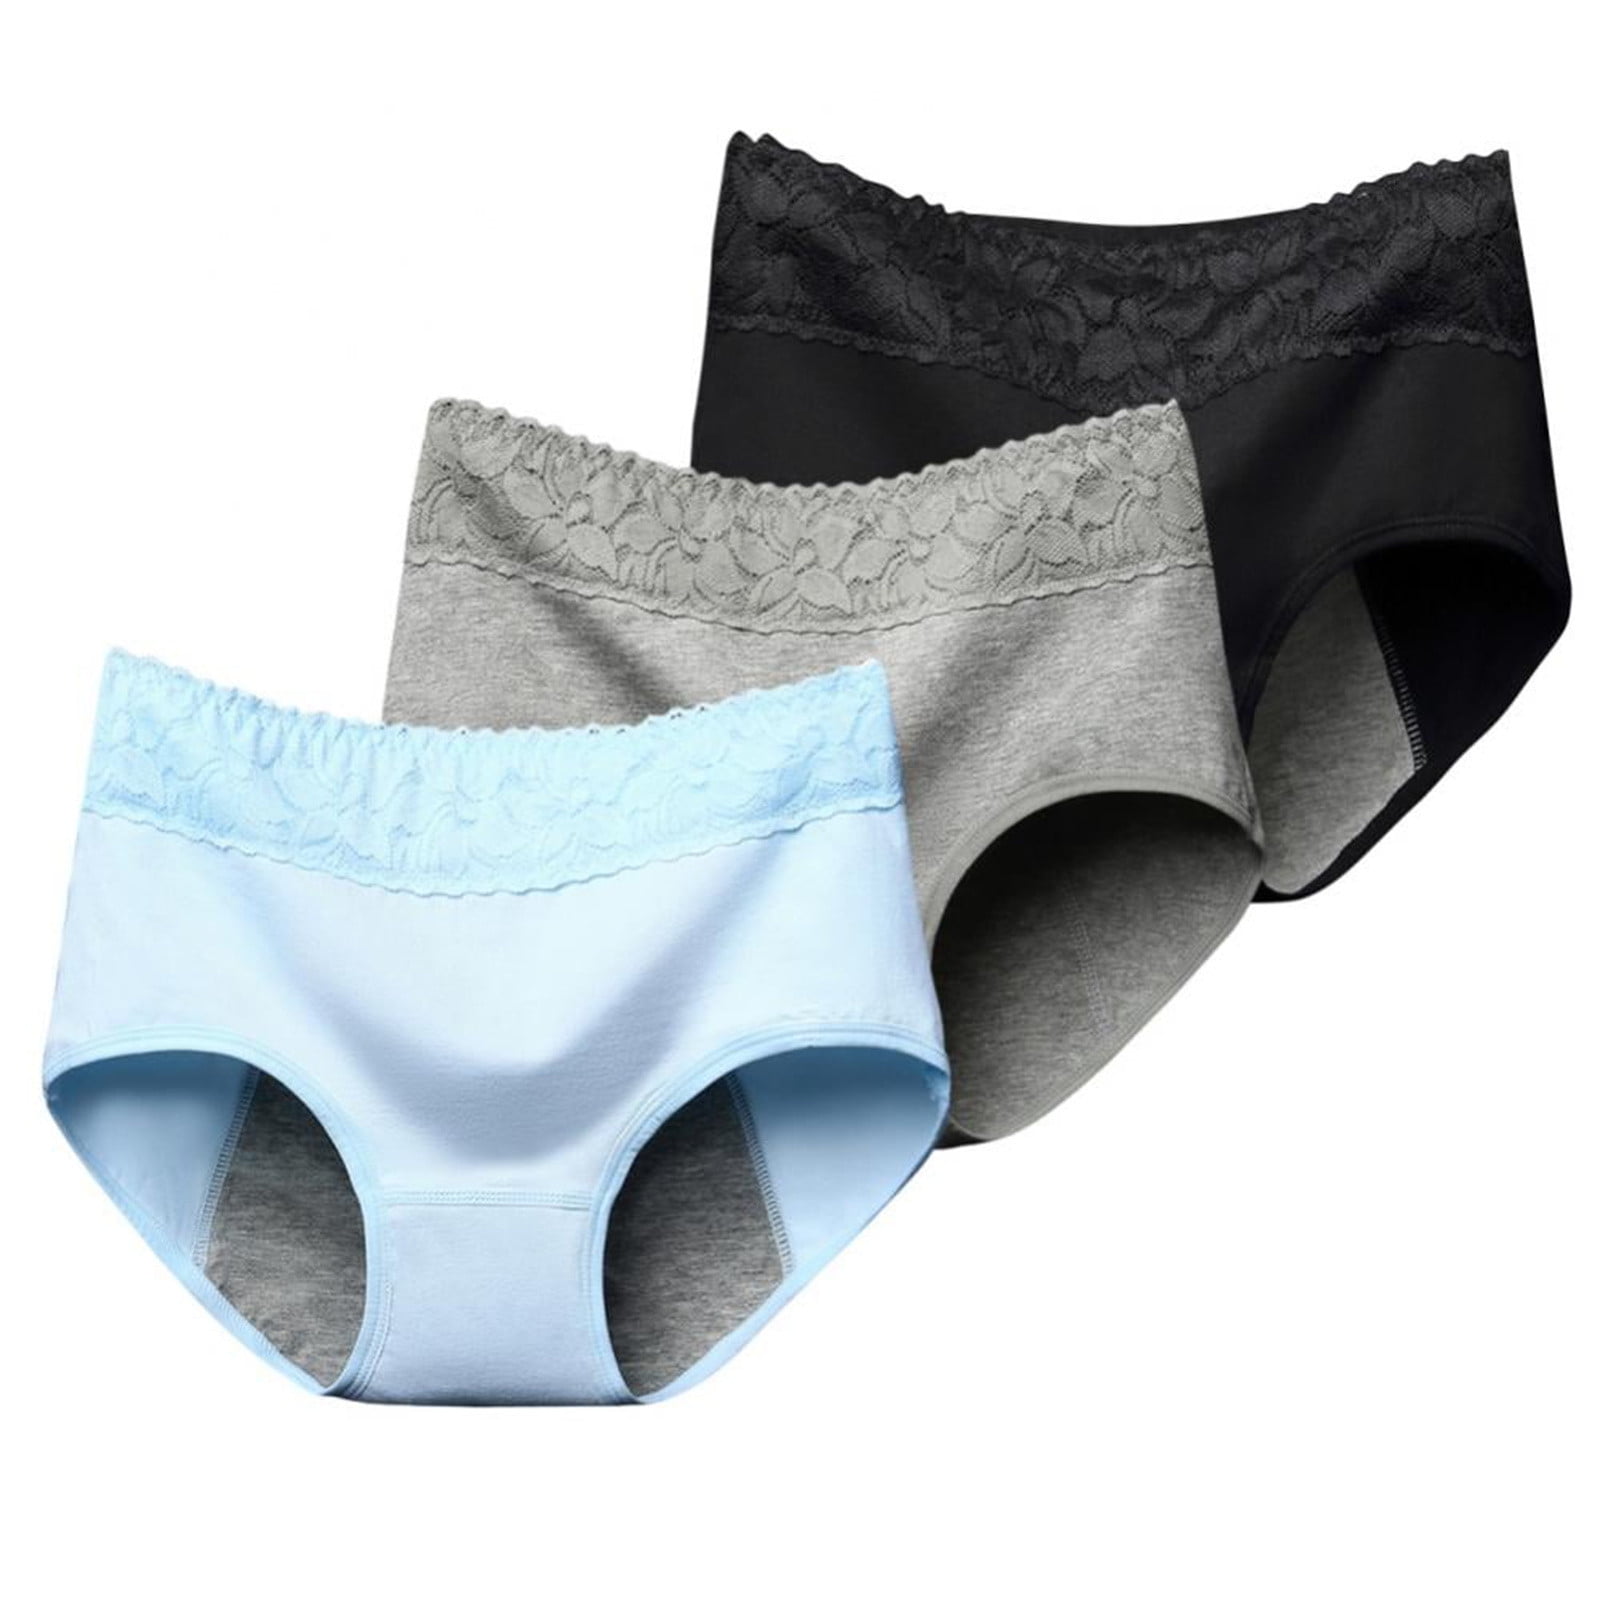 DORKASM Period Underwear for Women Heavy Breathable Menstrual Underwear for  Women Heavy Menstrual Panties Light Purple M 